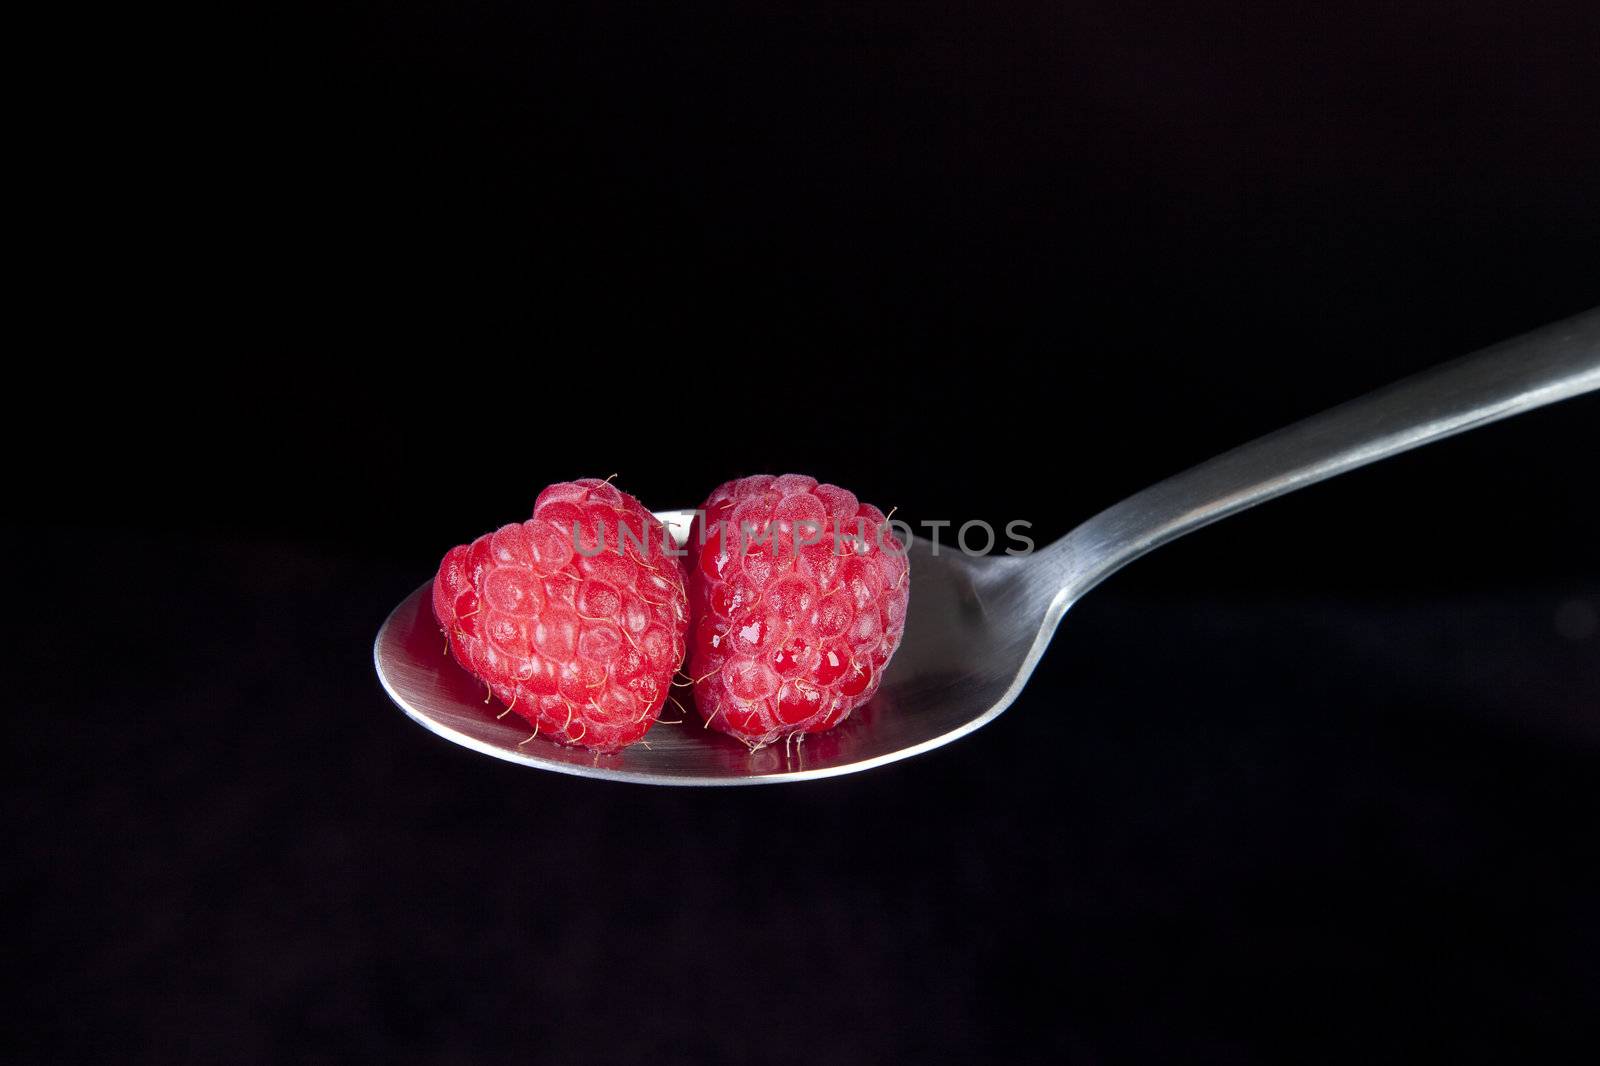 Fresh raspberries on spoon with black background.